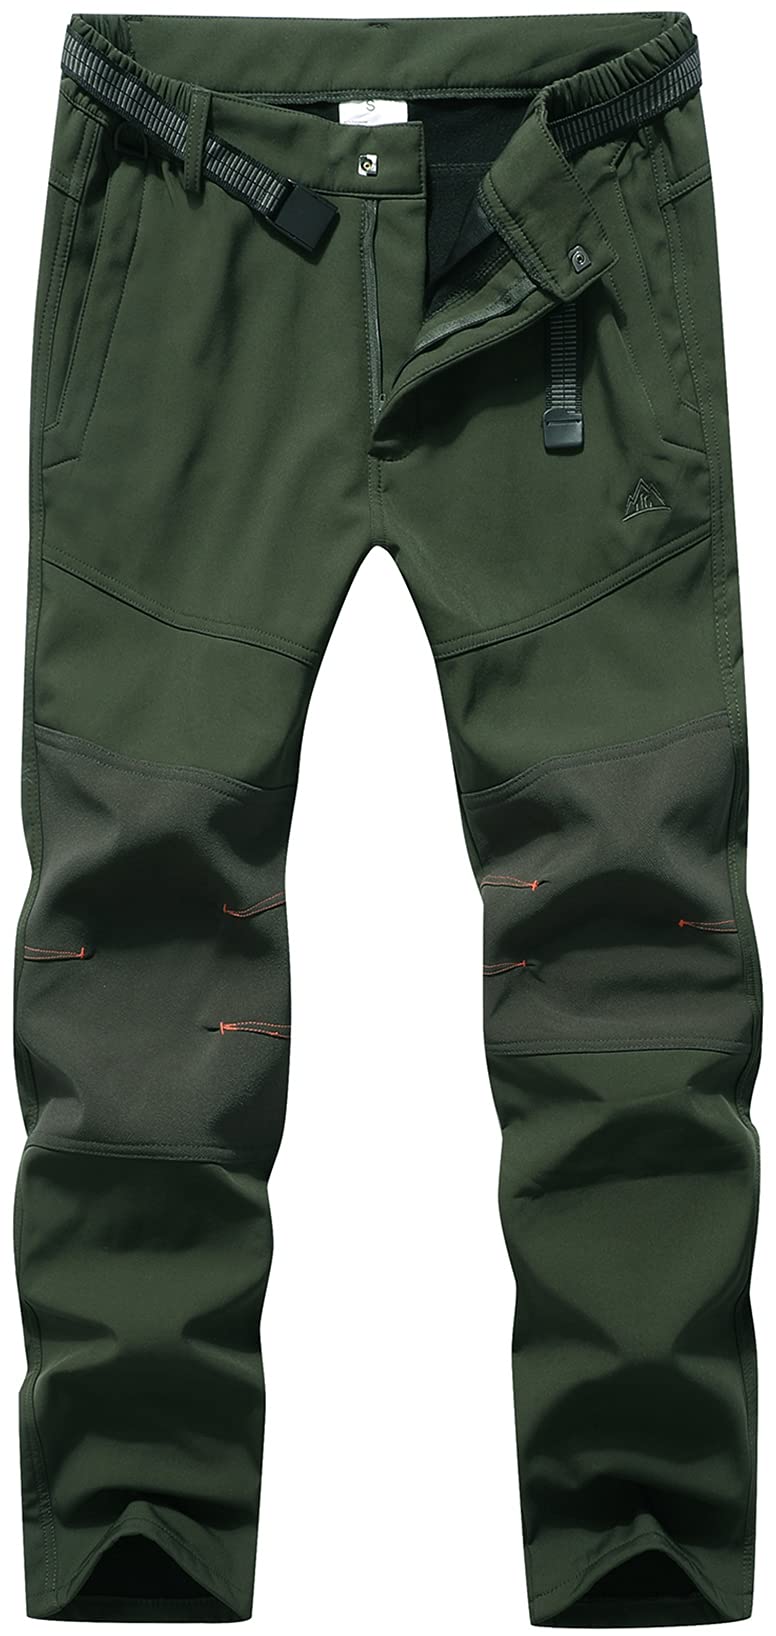 Women Thick Warm Fleece Softshell Pants Fishing Camping Hiking Skiing Pants  Waterproof Windproof Pants Size M (Black) 